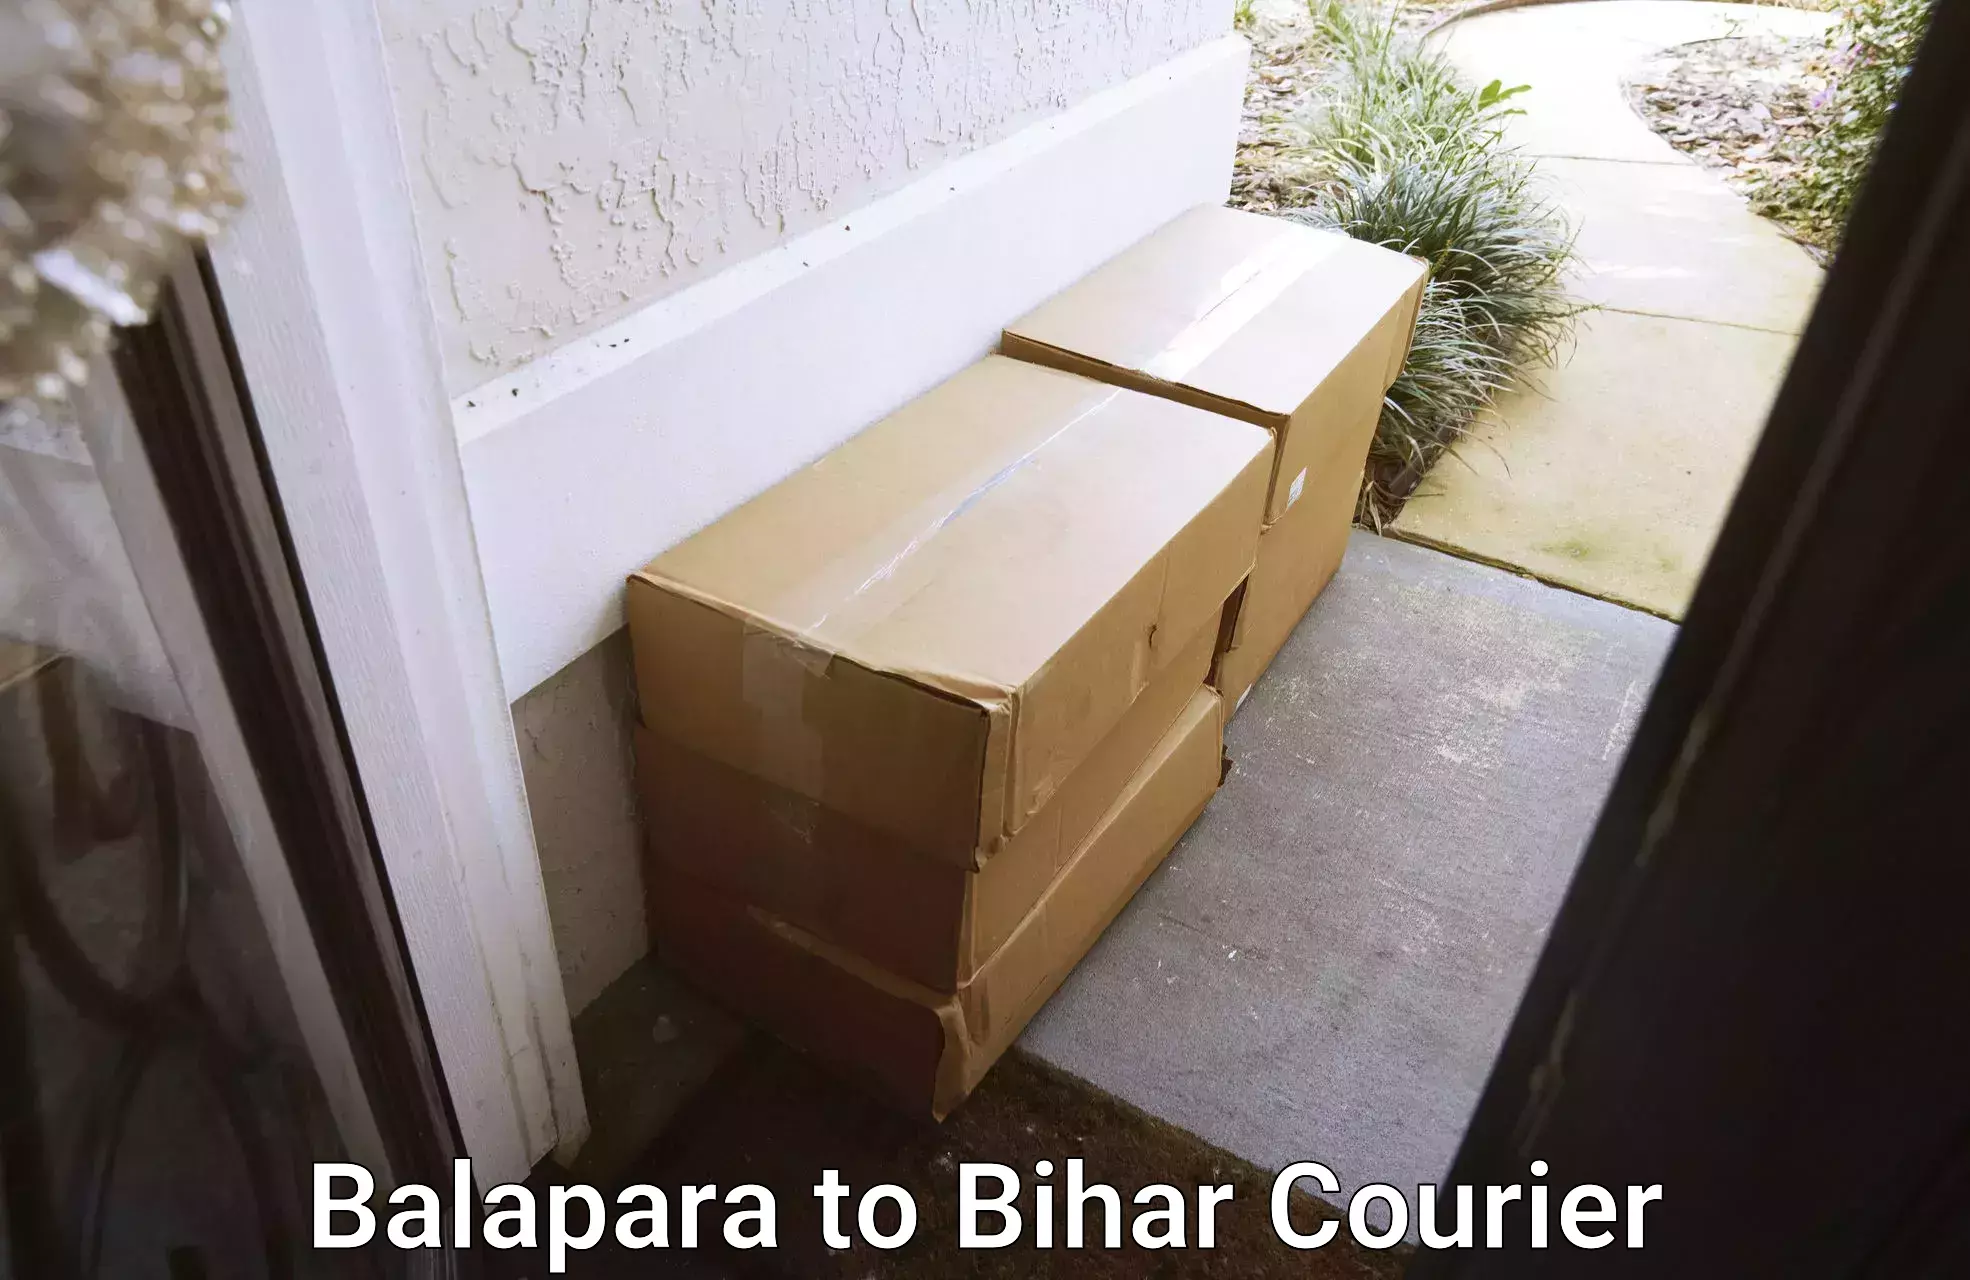 Express delivery network Balapara to Jaynagar